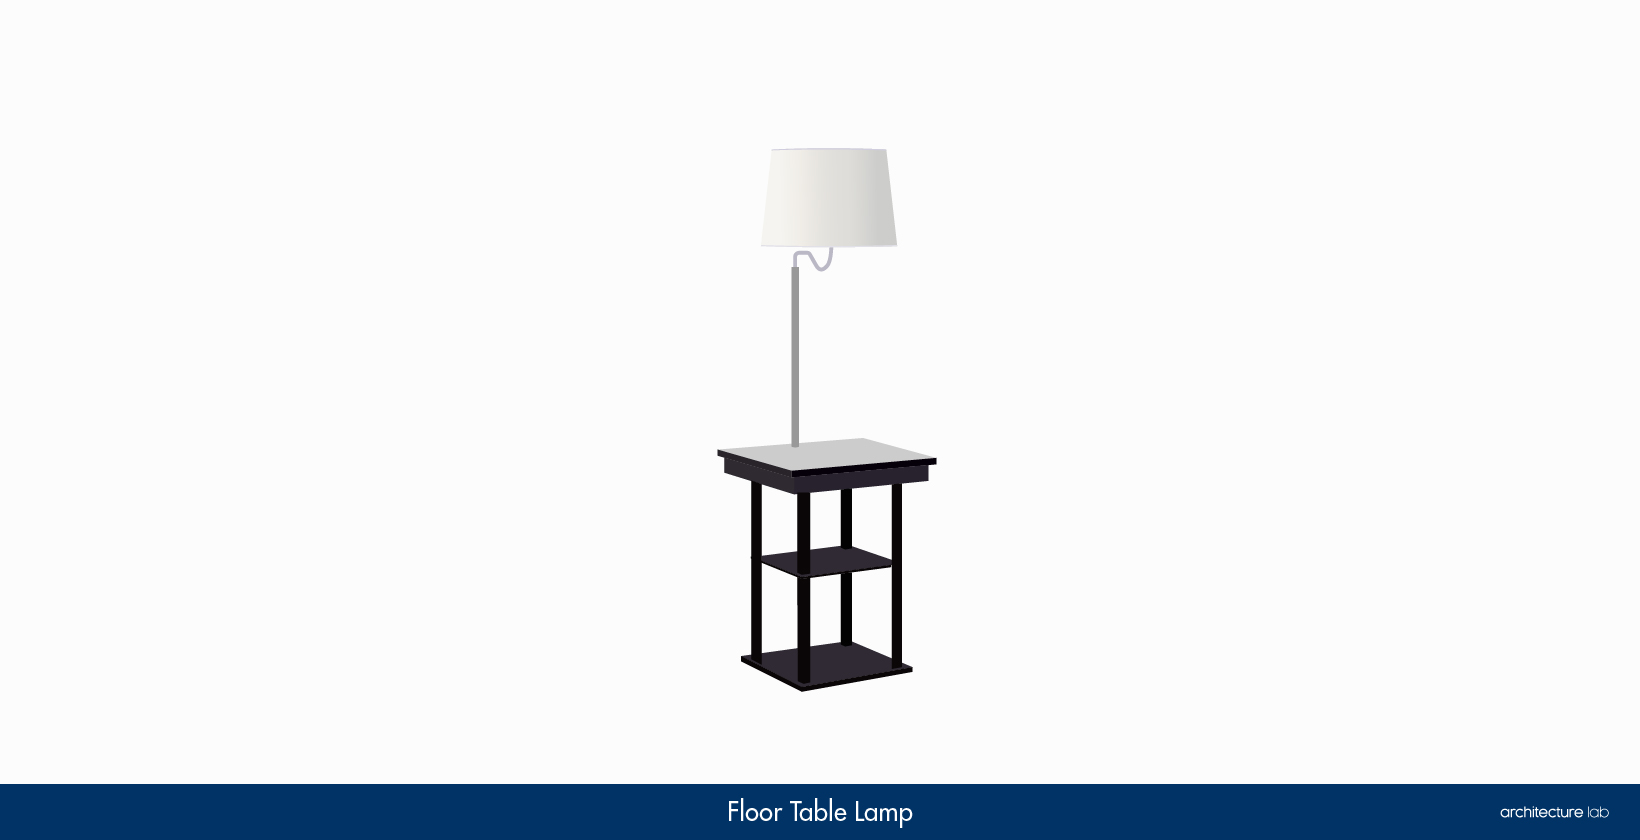 7. Floor table lamp